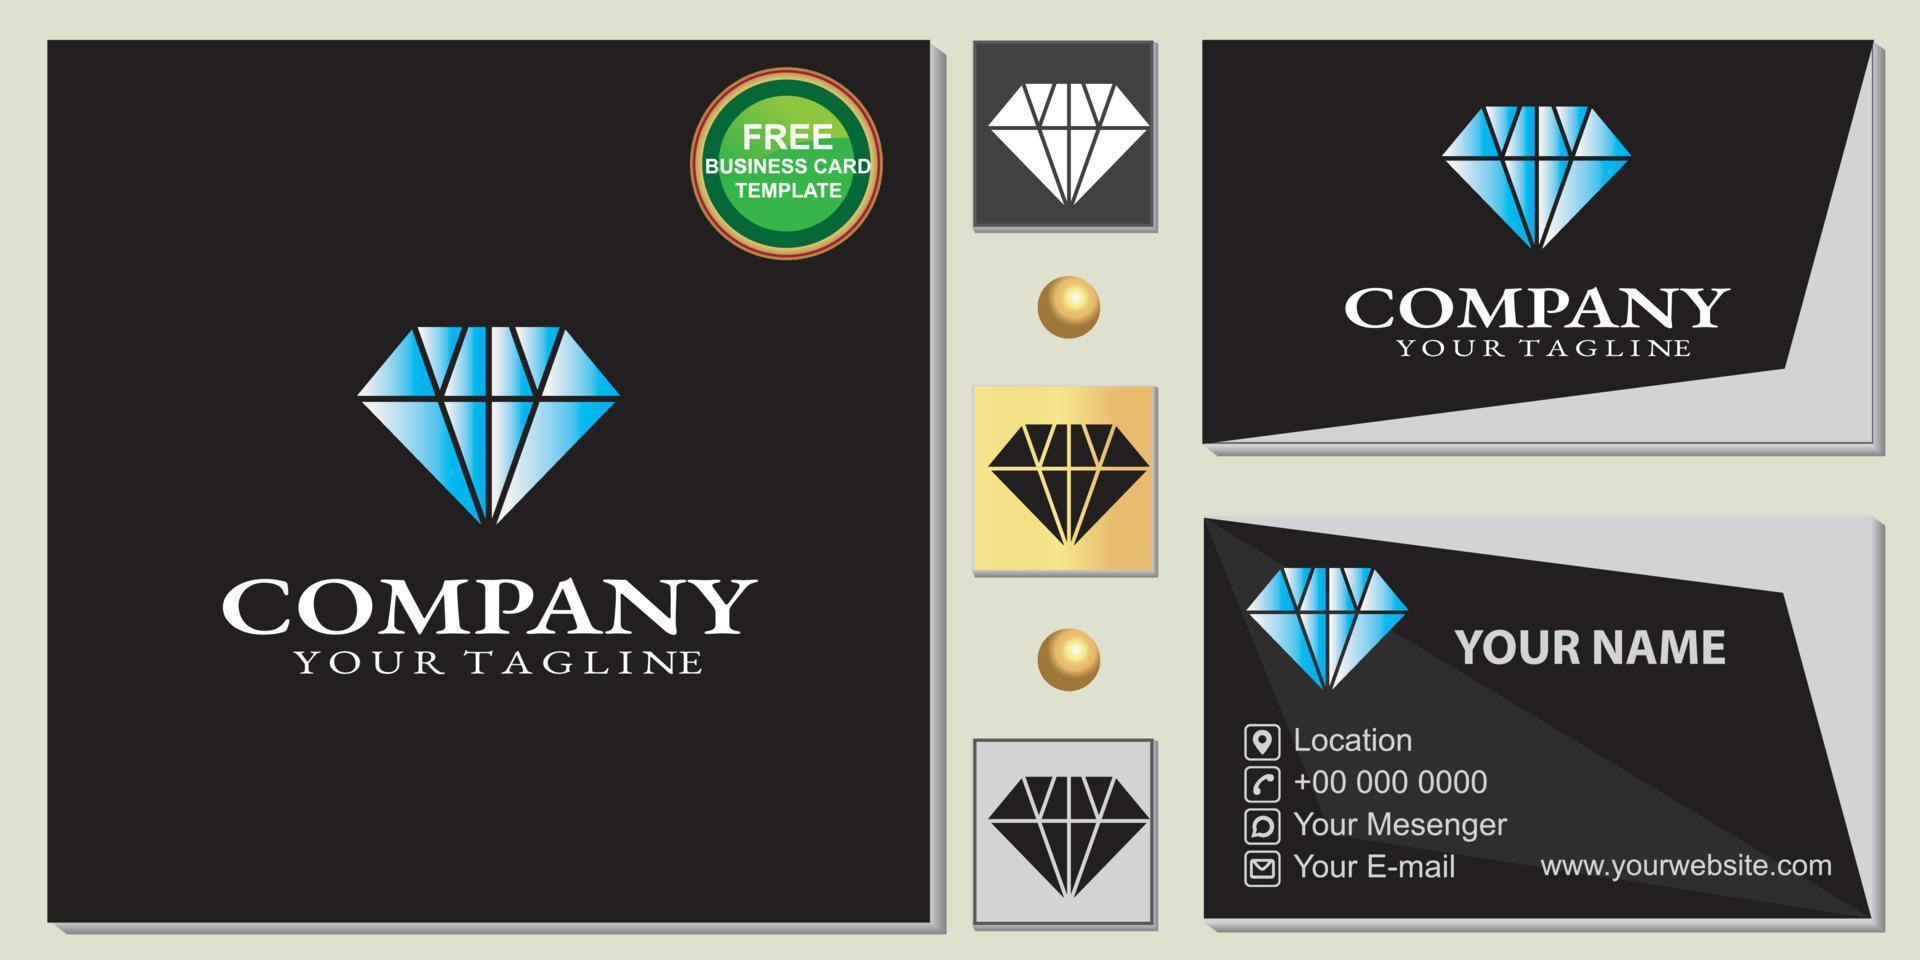 logotipo de diamante de luxo, modelo de cartão de visita premium simples e gratuito vetor eps 10